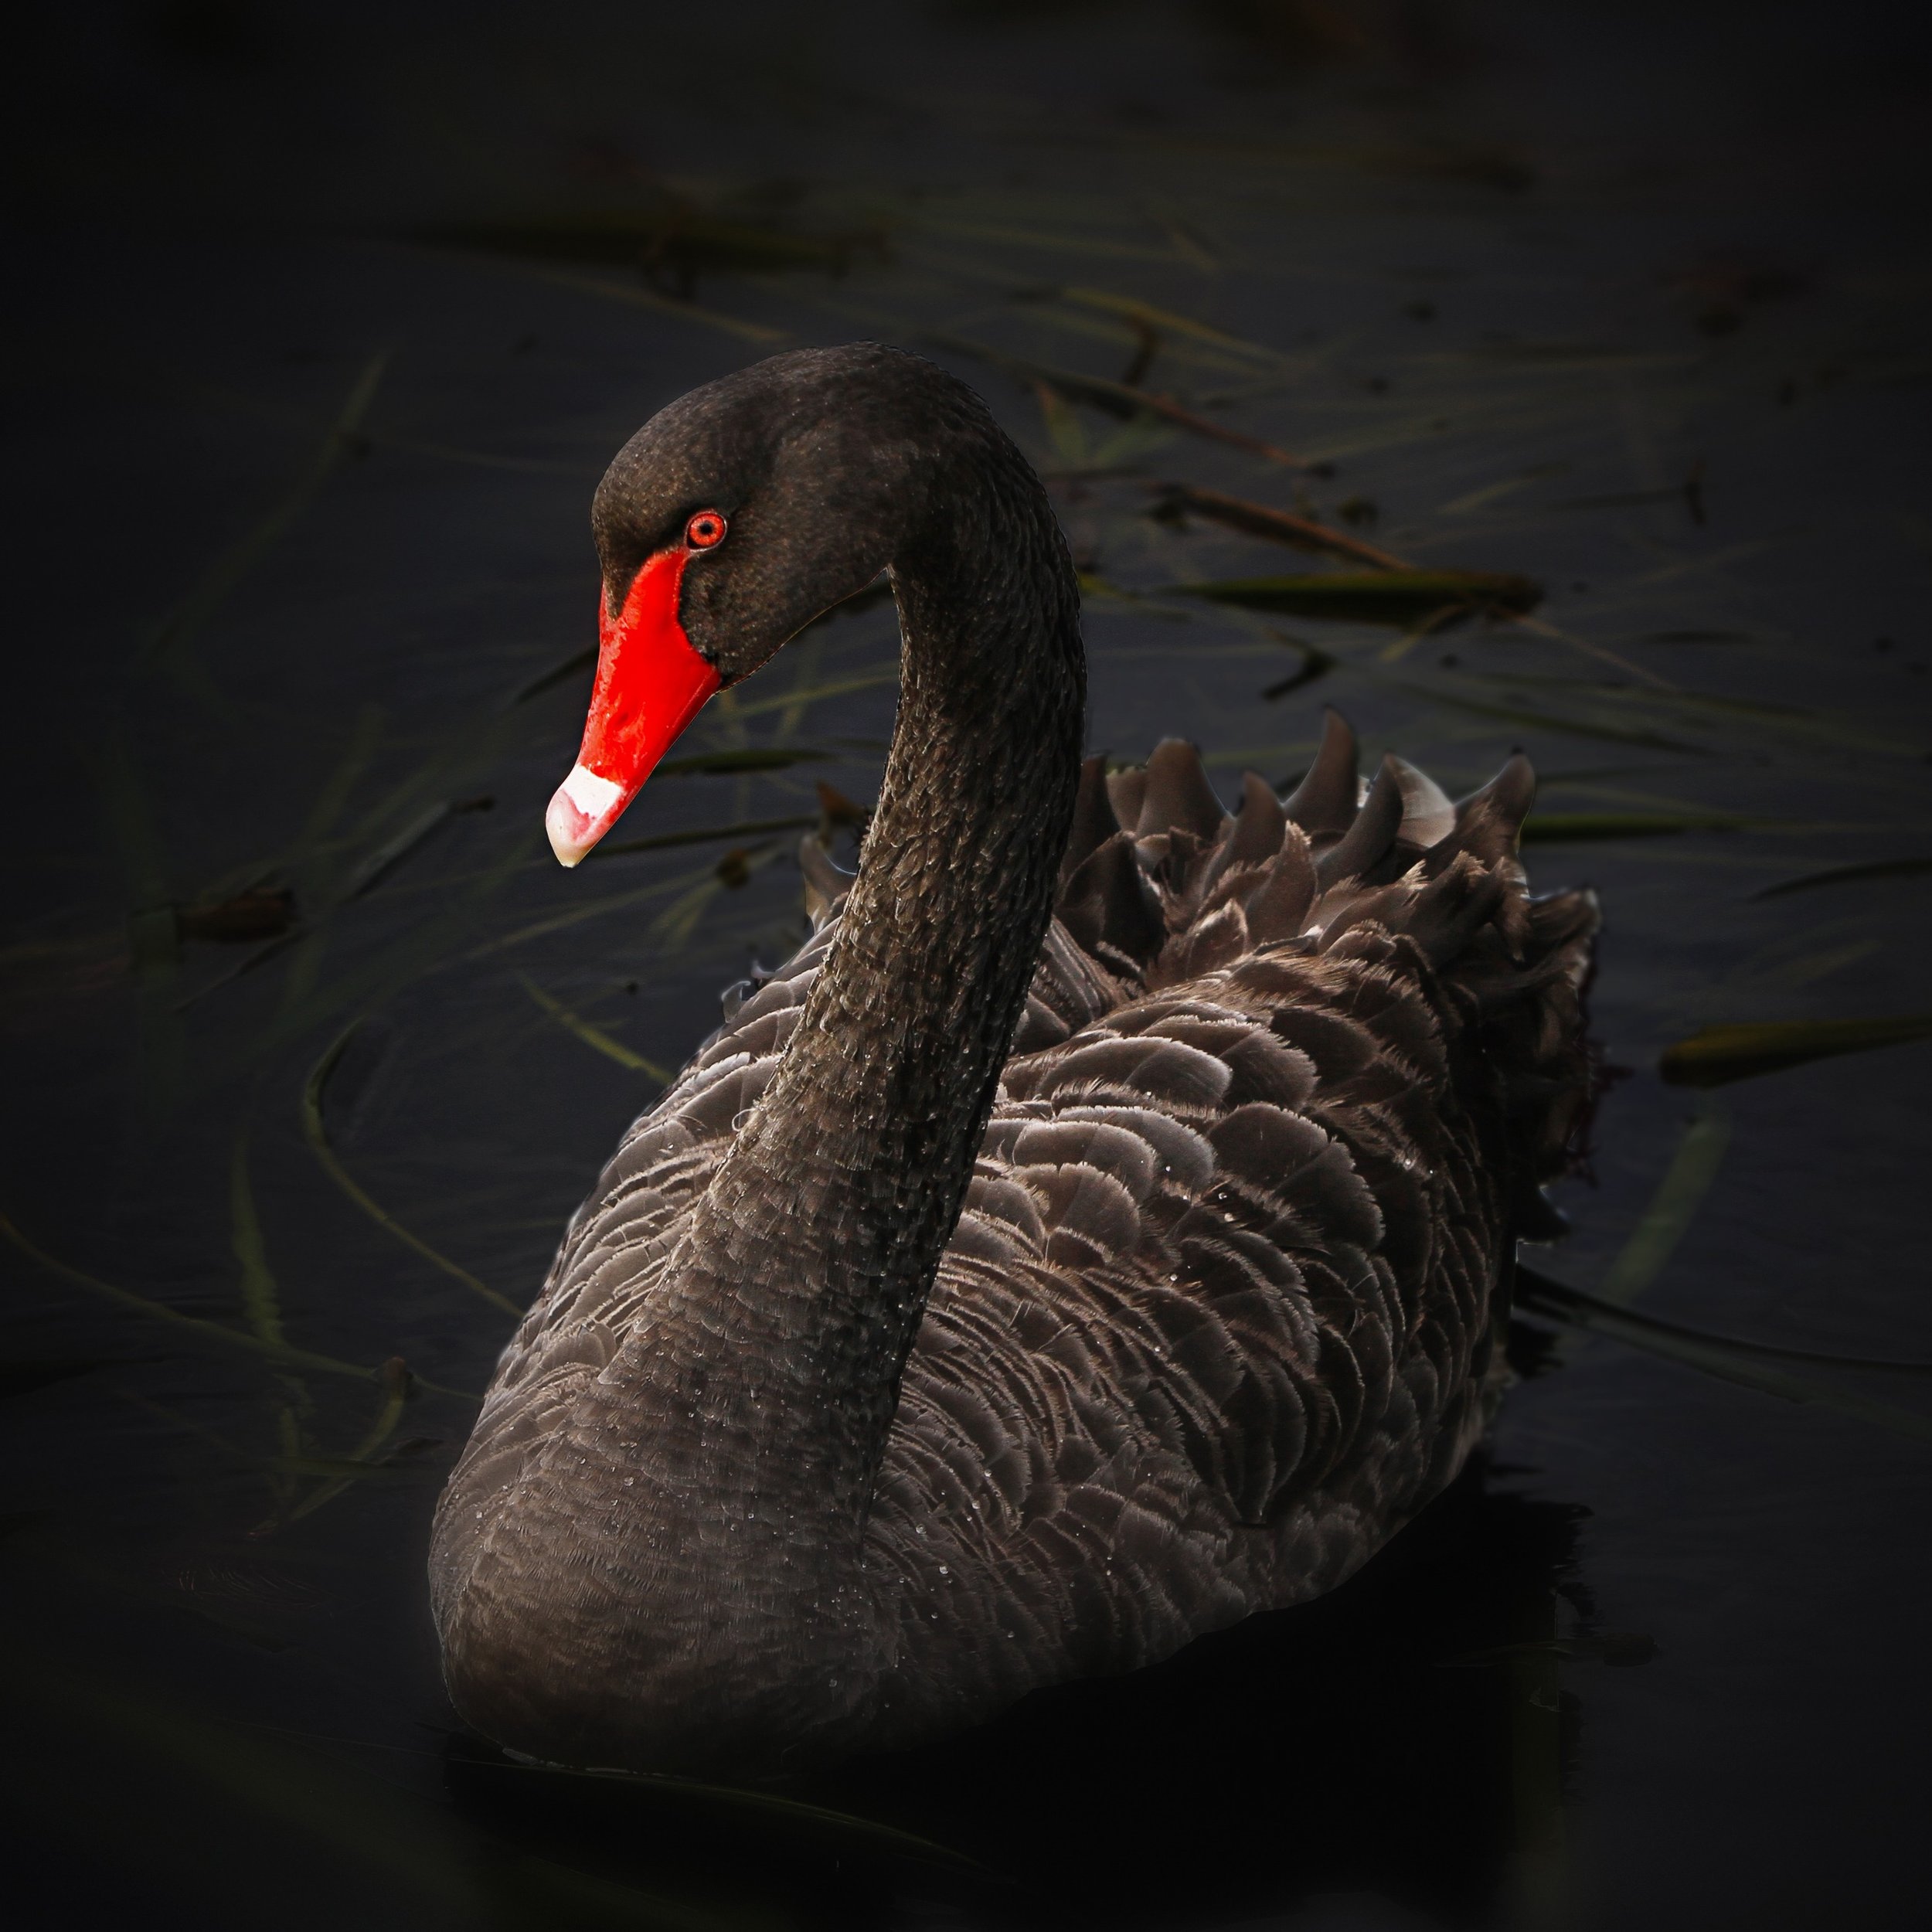 water-bird-wing-lake-reflection-beak-1351207-pxhere.com.jpg